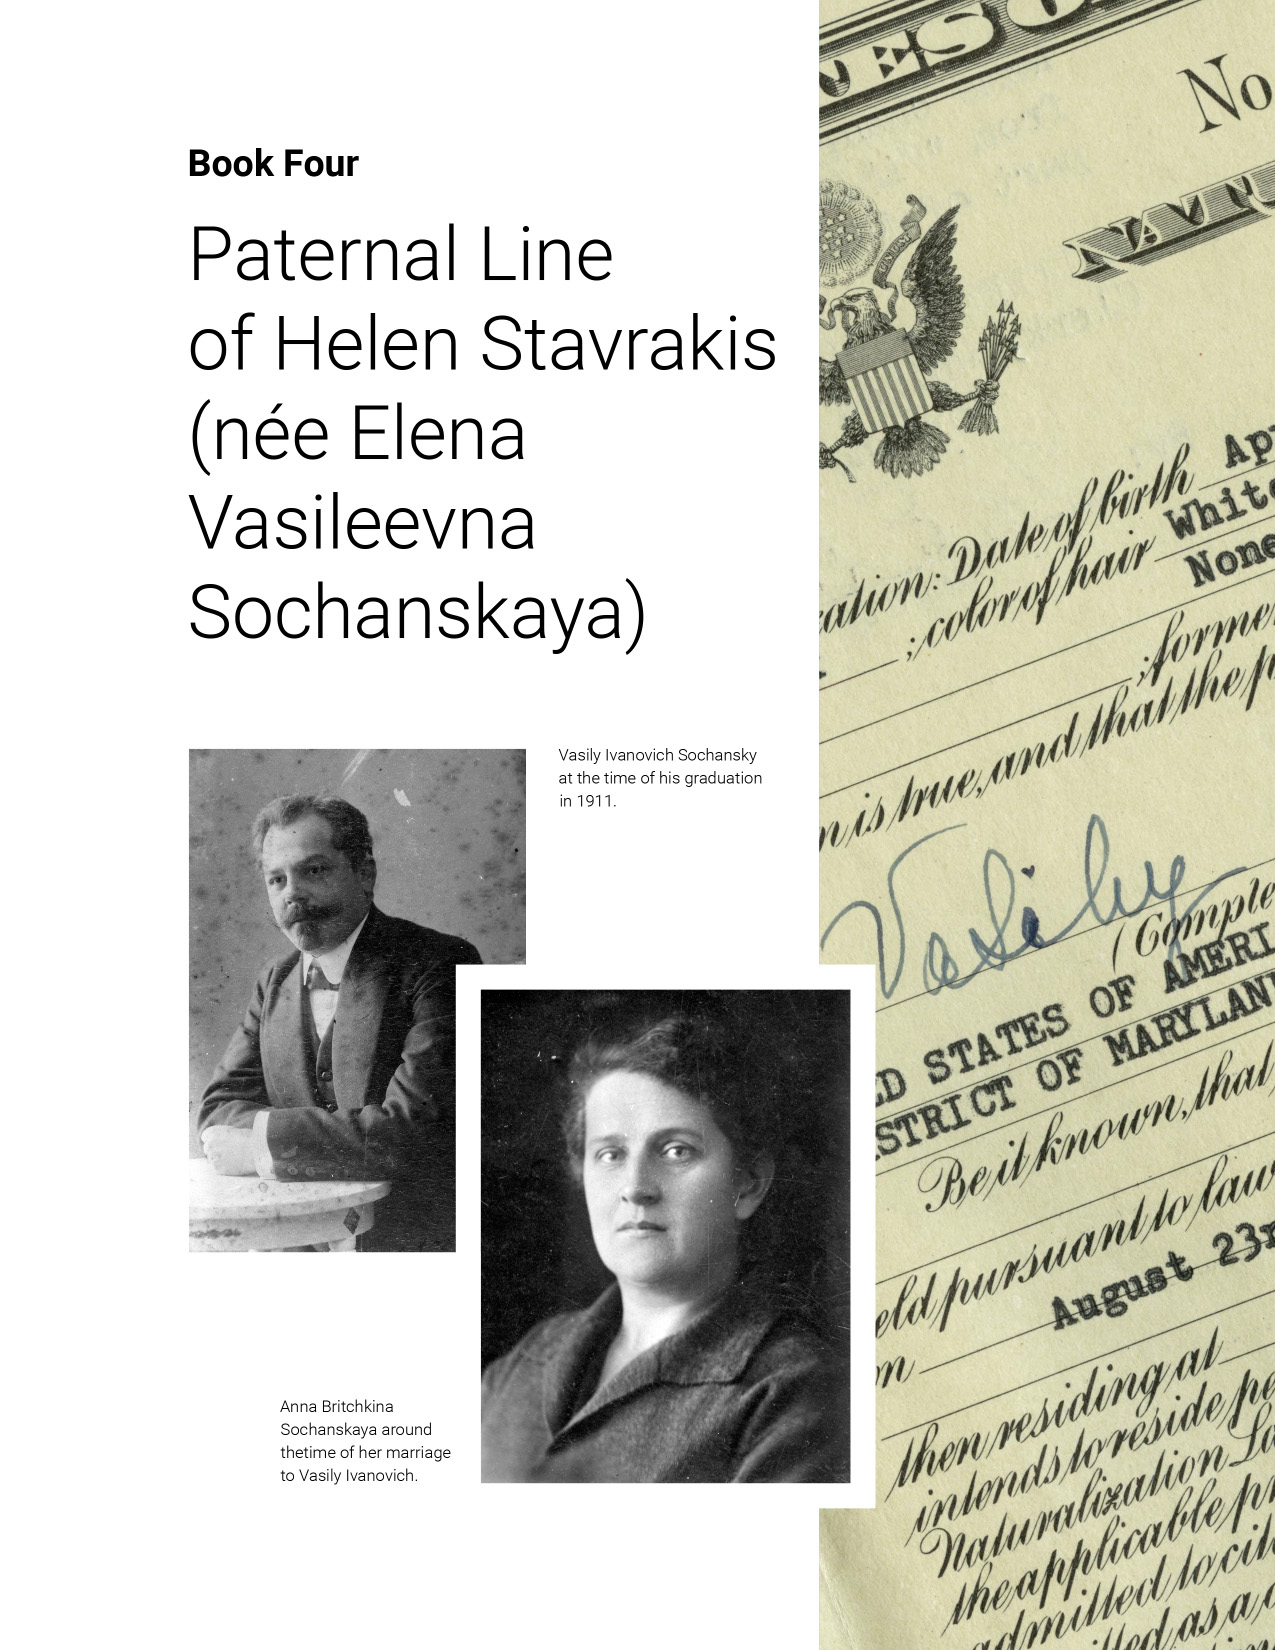 Book 4: Paternal Line of Helen Stavrakis